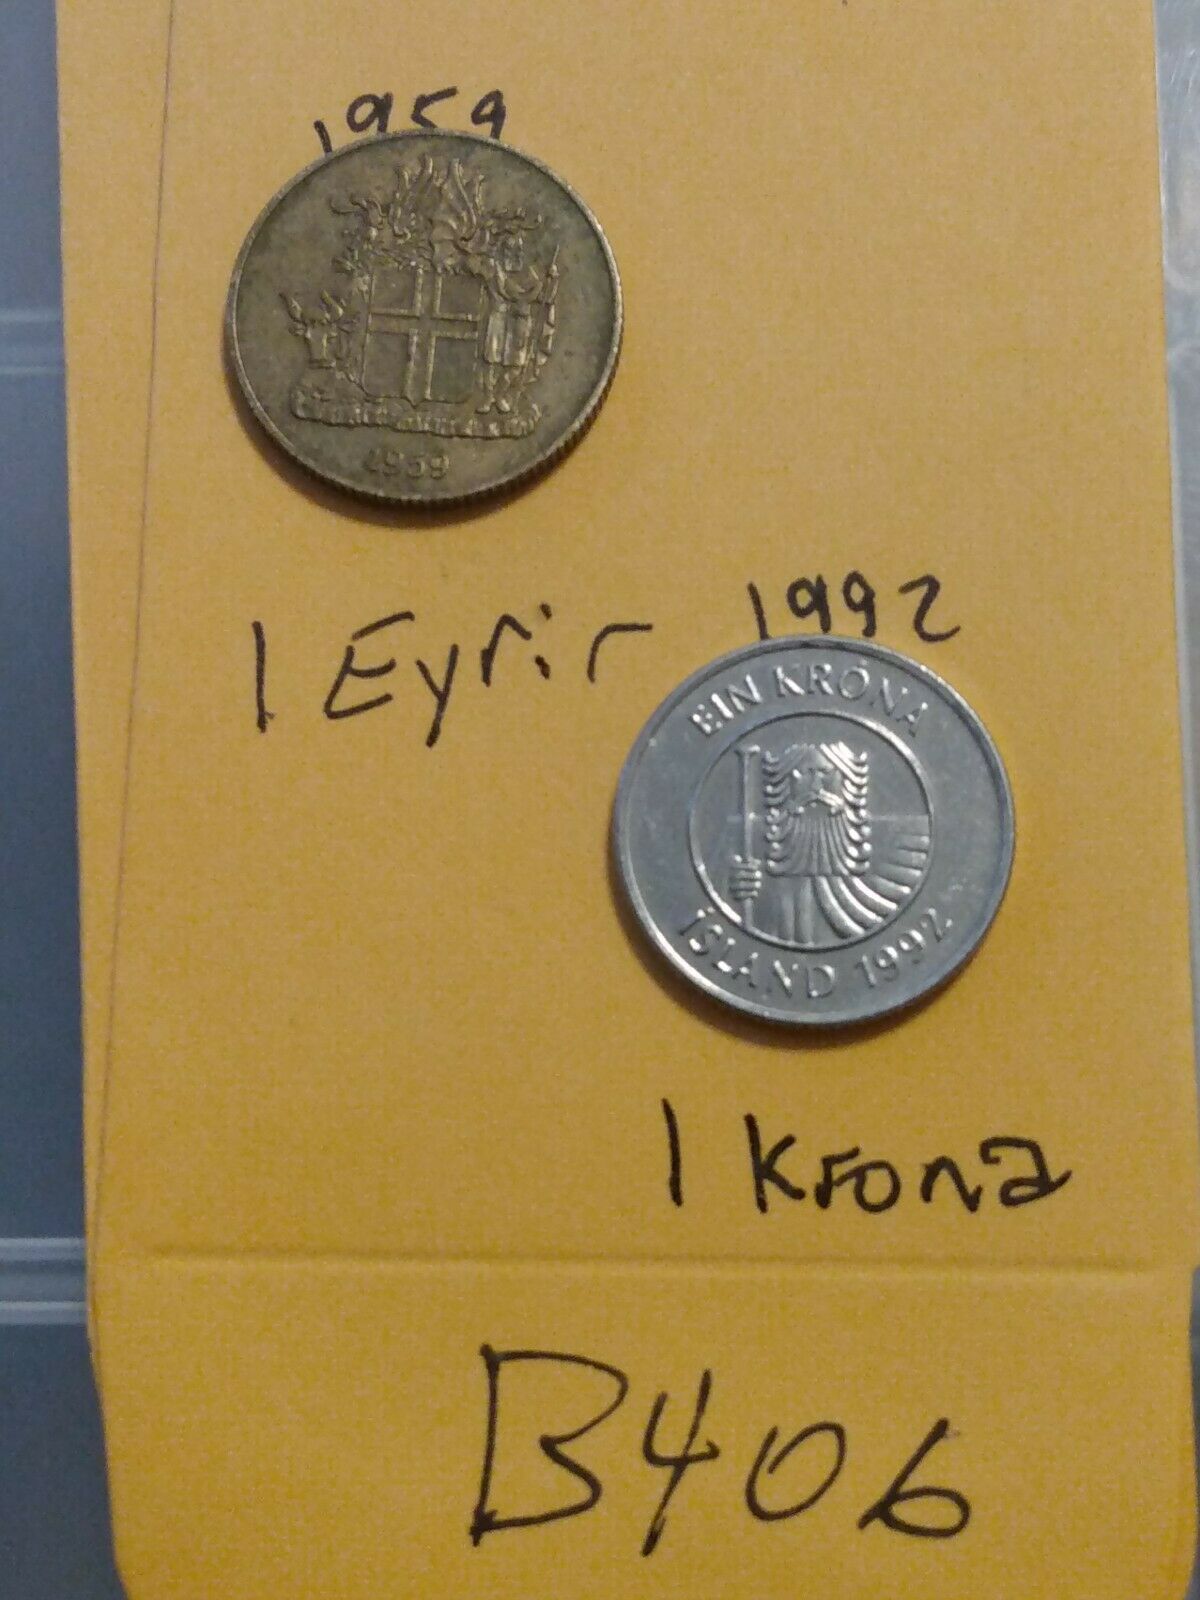 🇮🇸🇮🇸 Iceland Coins 1959 1 Eyrir & 1992 1 Krona 🇮🇸🇮🇸